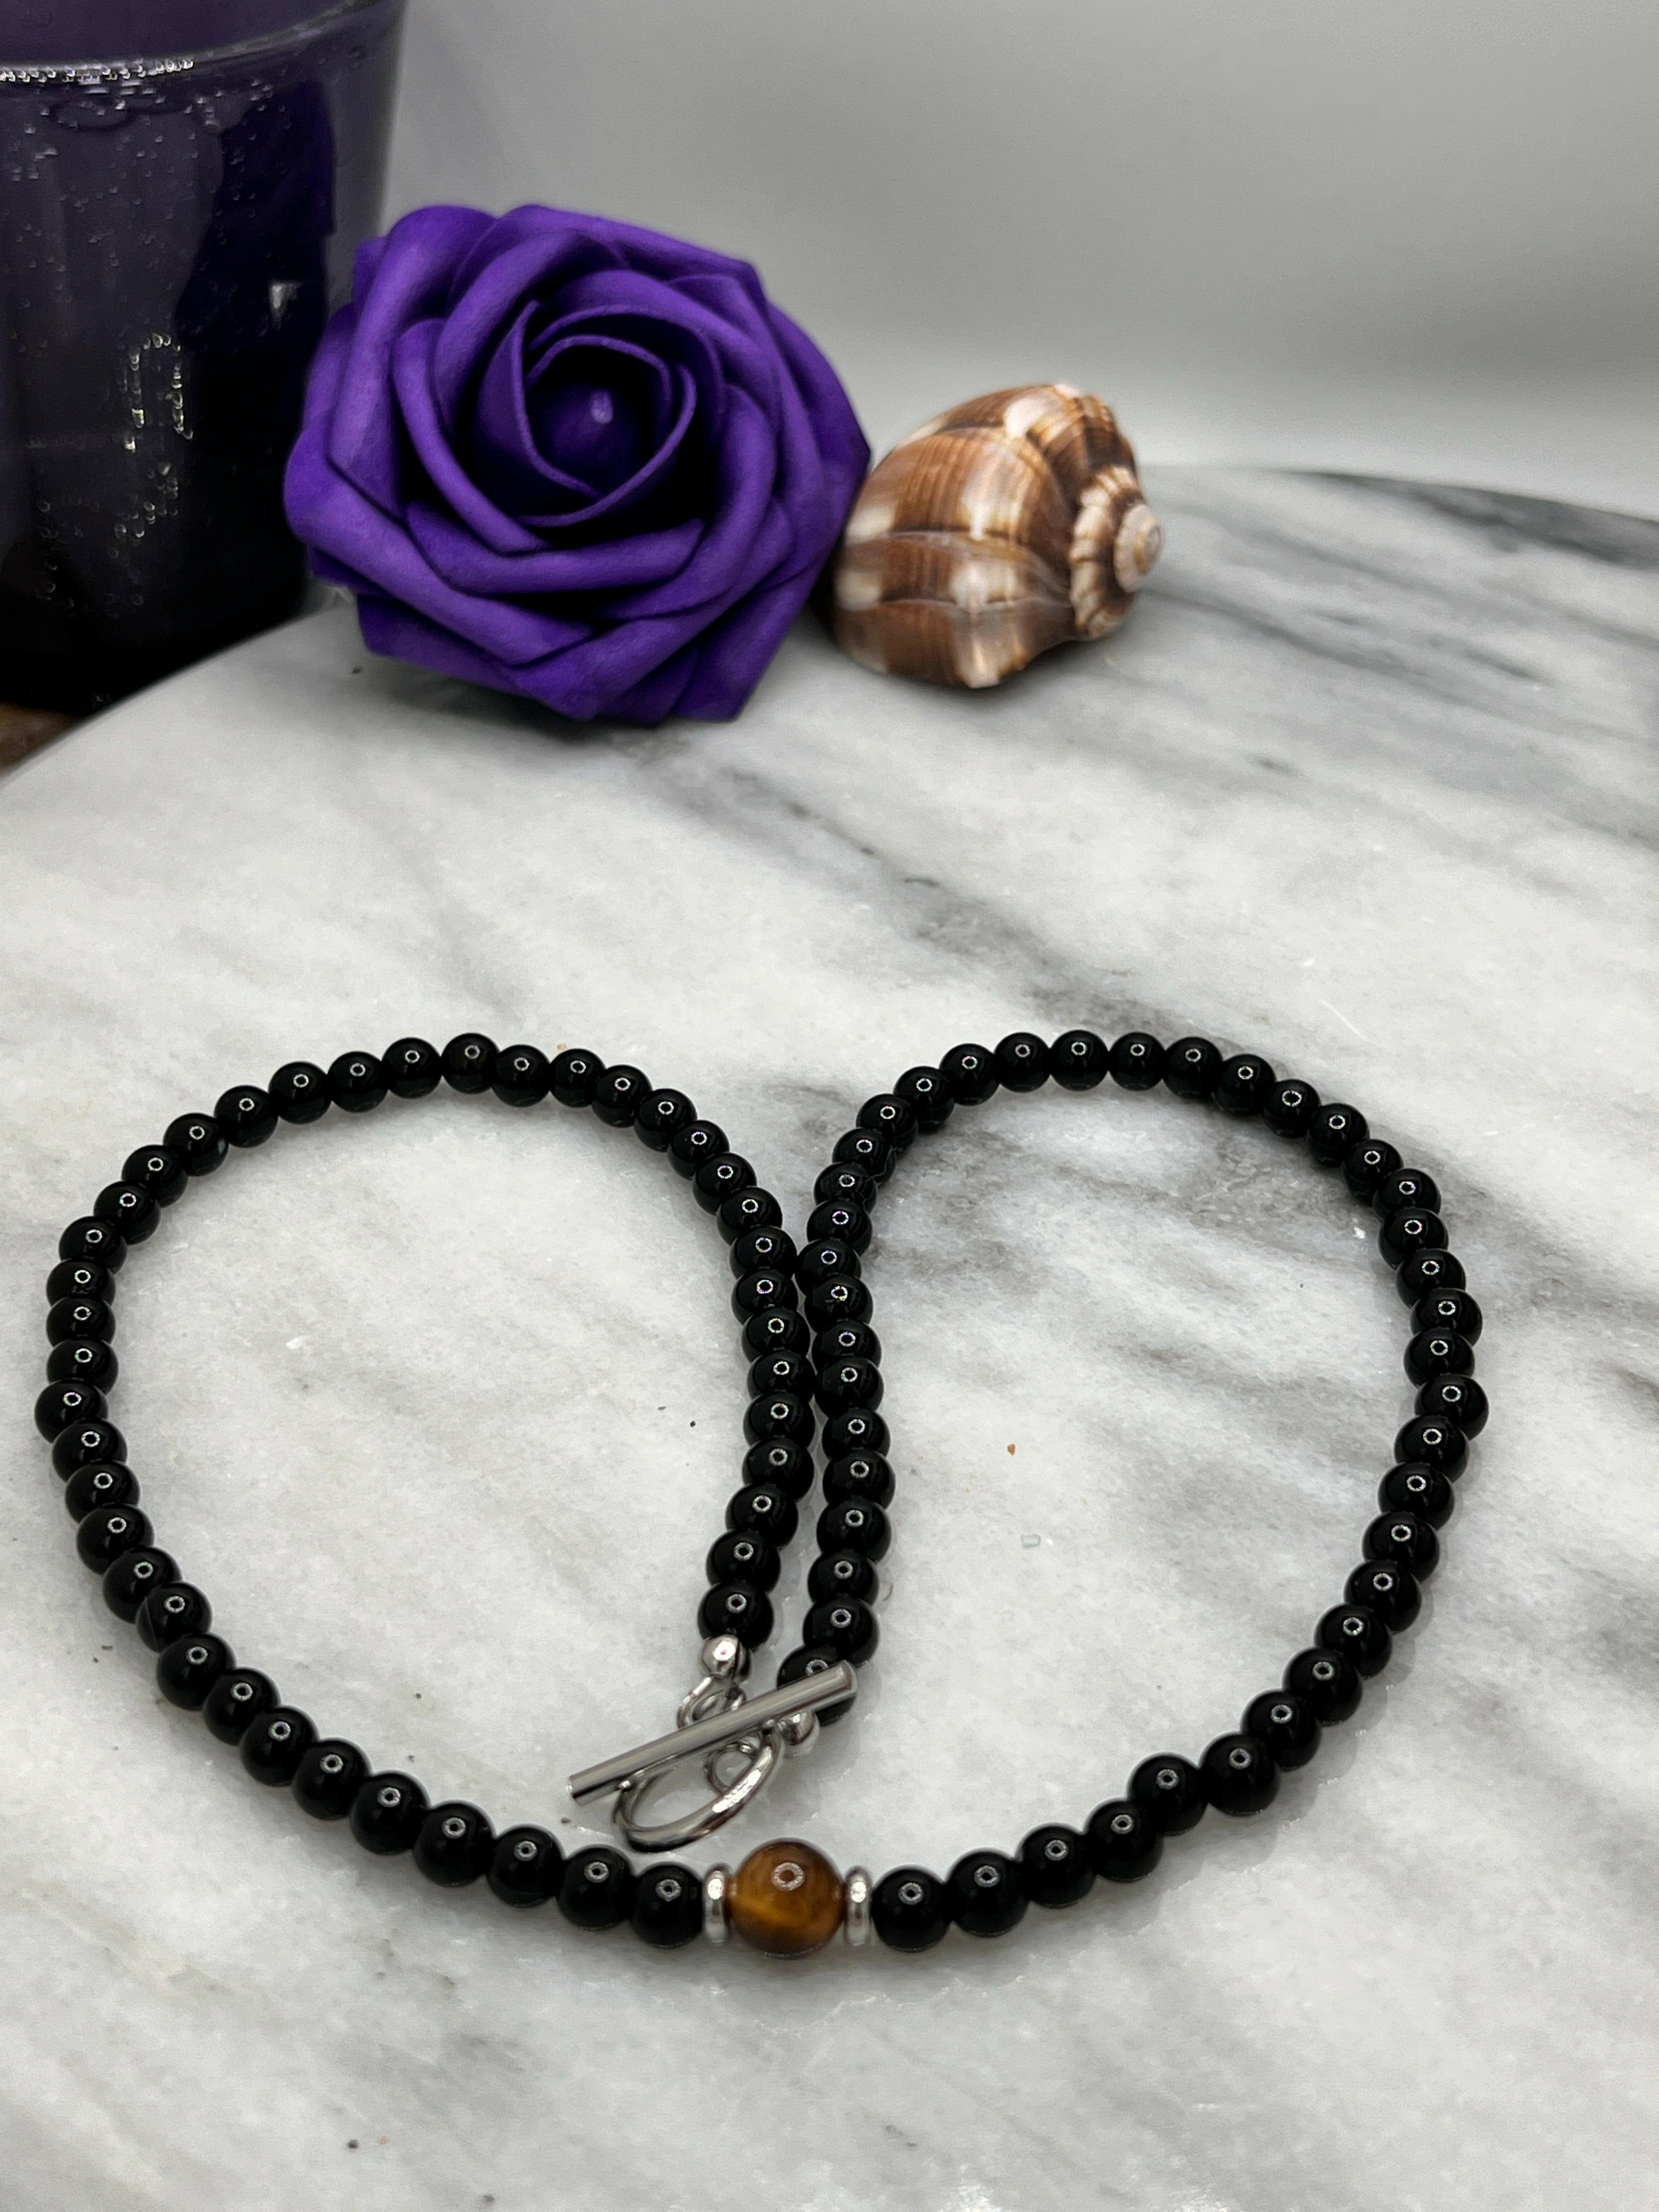 Elegant Onyx Necklace with Tiger Eye Pendant - Stylish Jewelry for Women